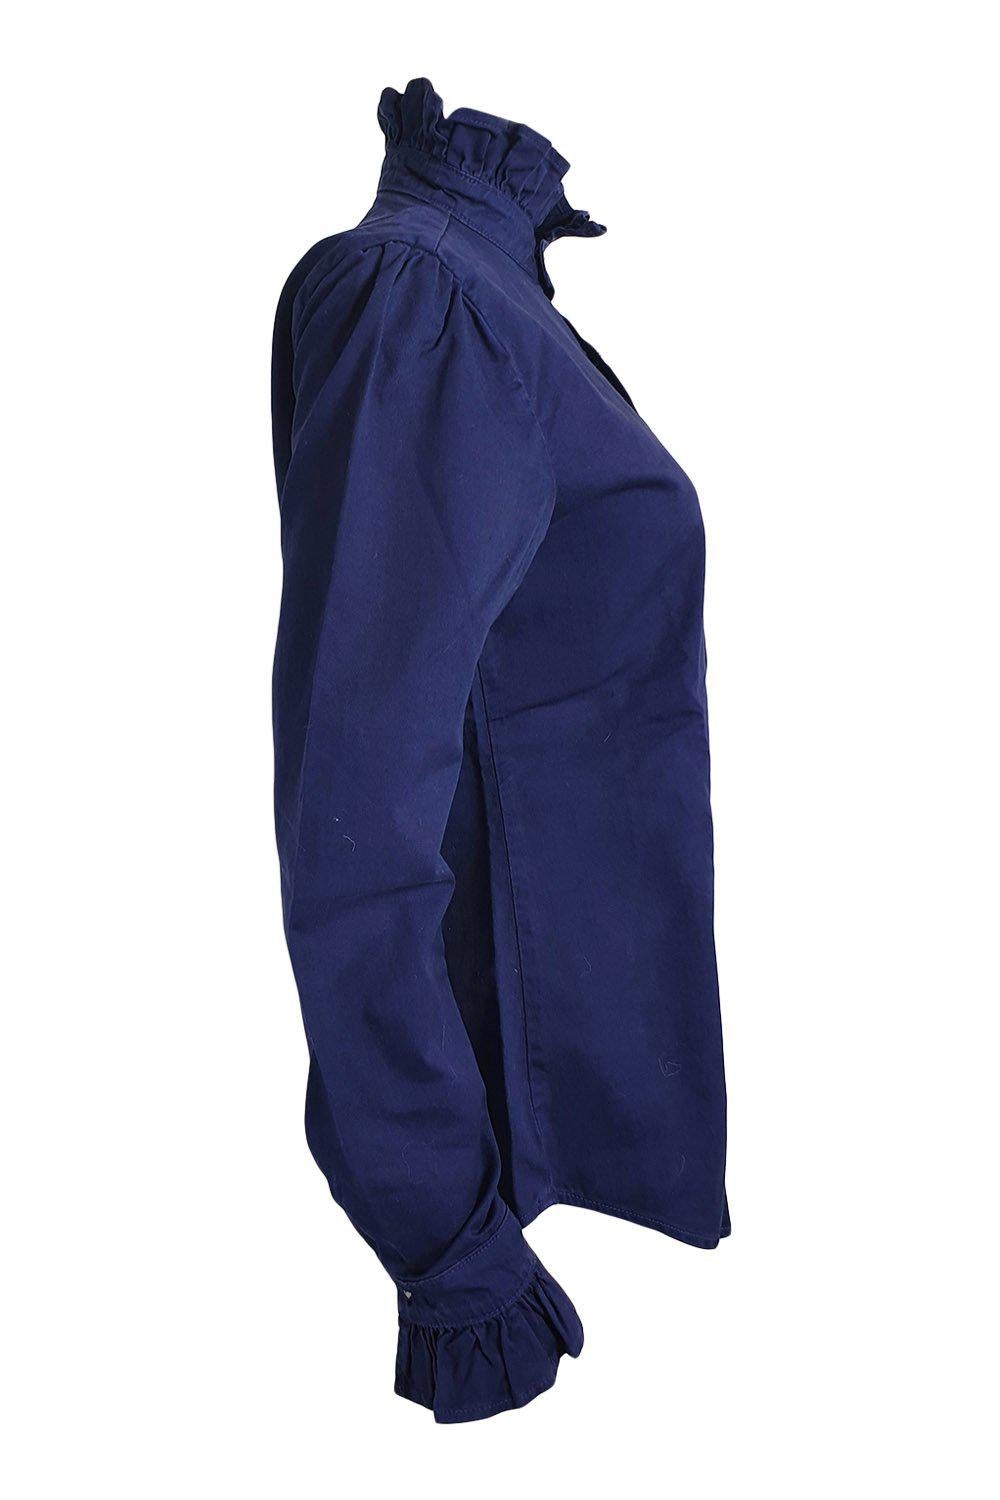 EVE DENIM 100% Cotton Violet Shirt in Navy Blue (XS)-Eve Denim-The Freperie